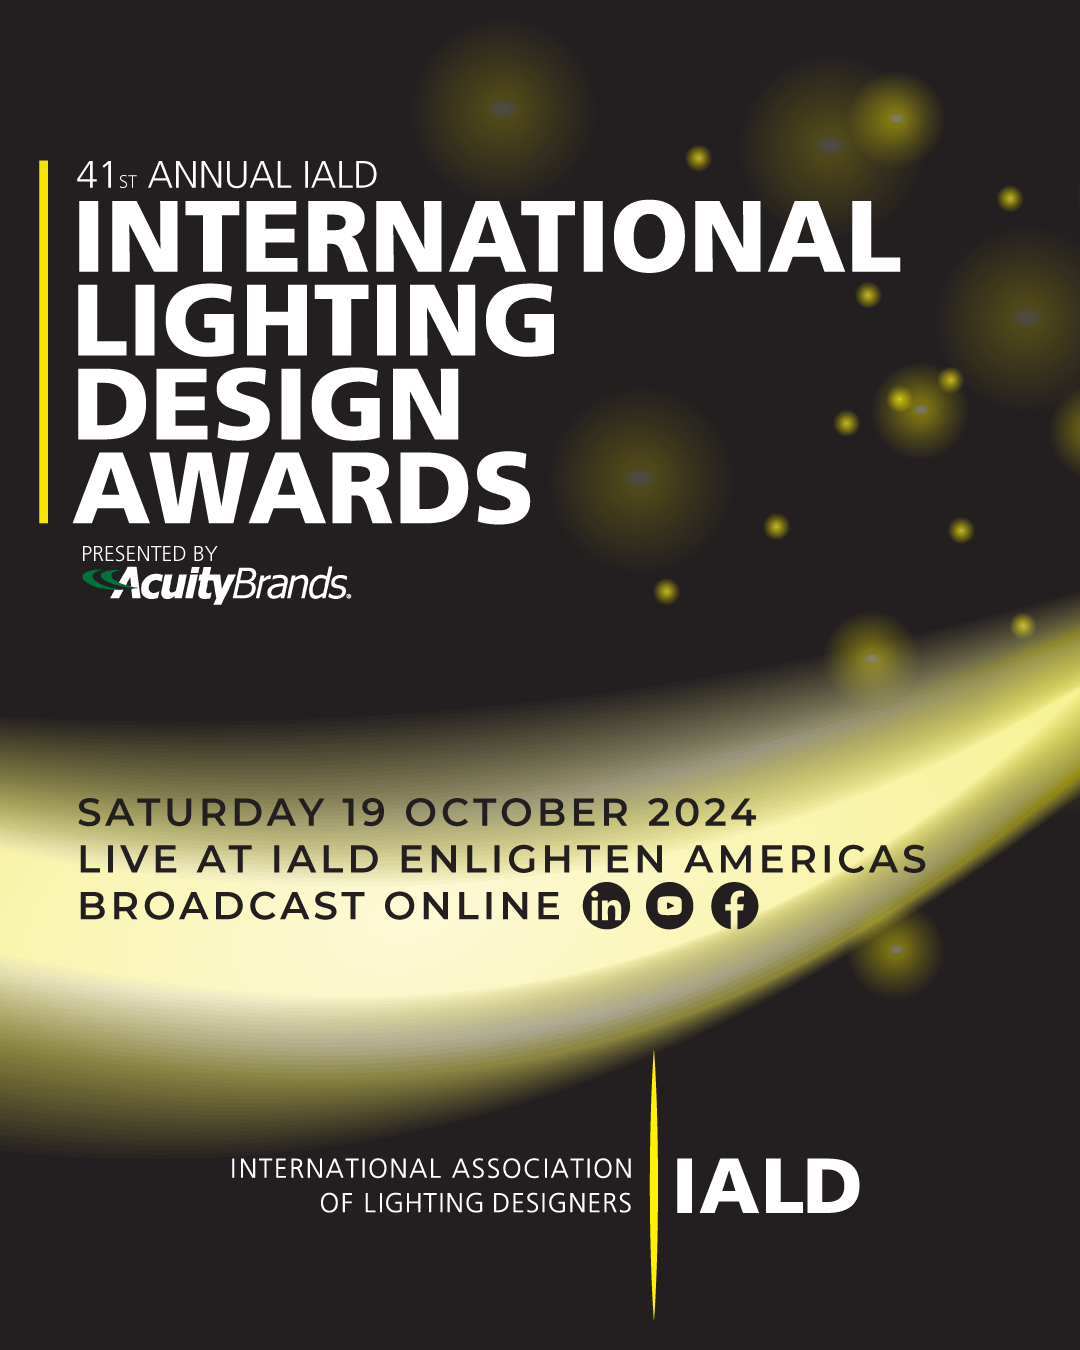 The 2024 IALD International Lighting Design Awards